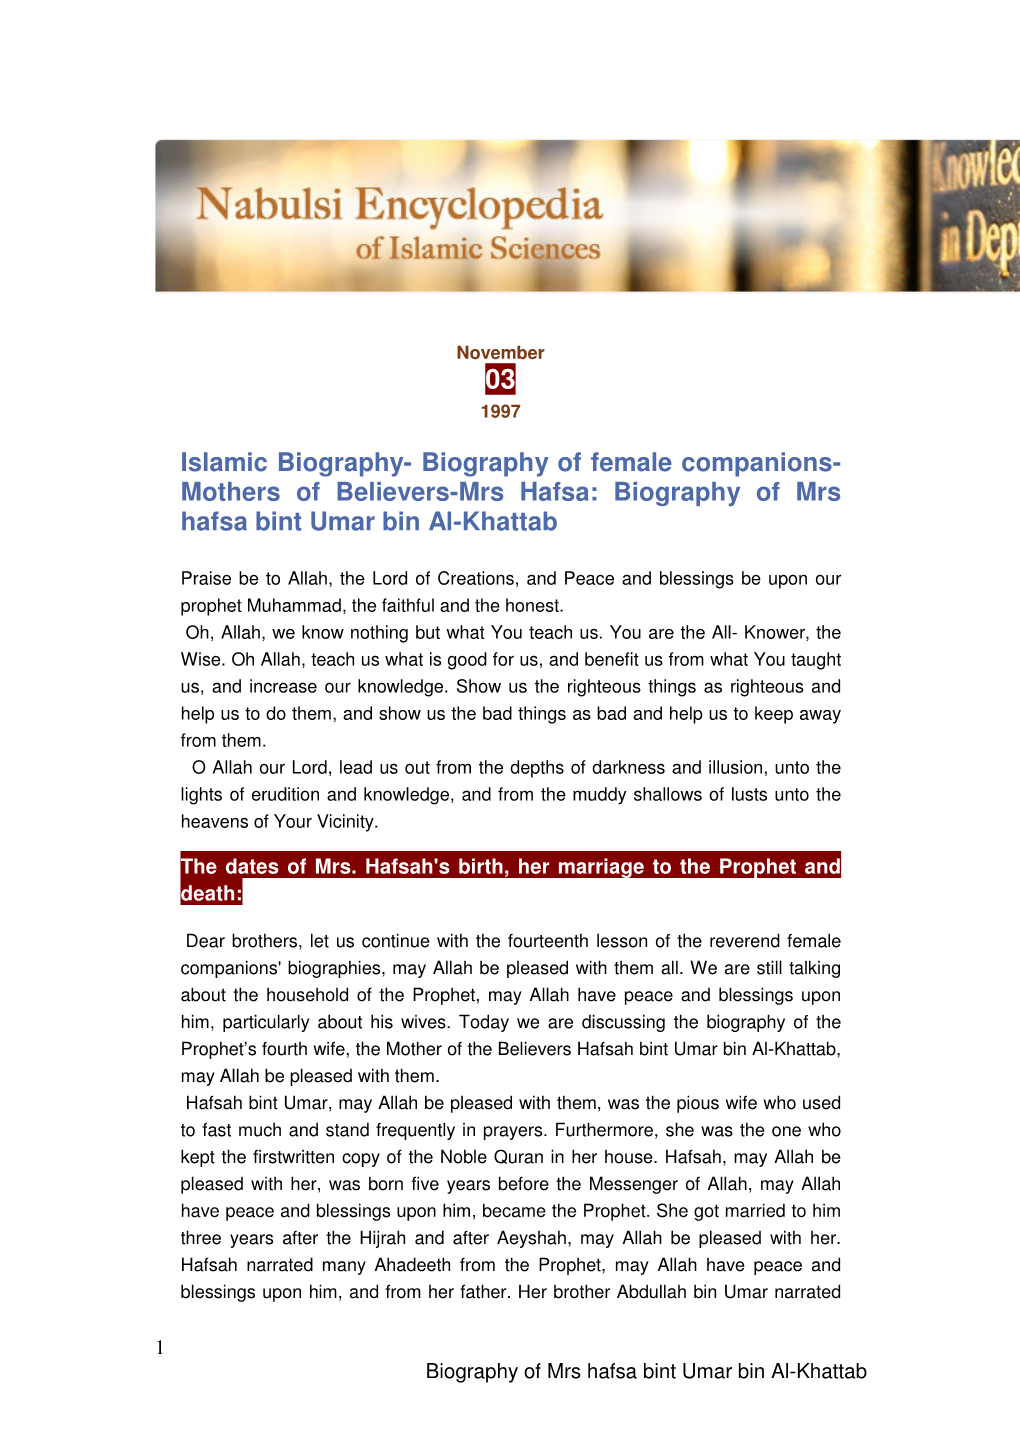 Biography of Mrs Hafsa Bint Umar Bin Al-Khattab